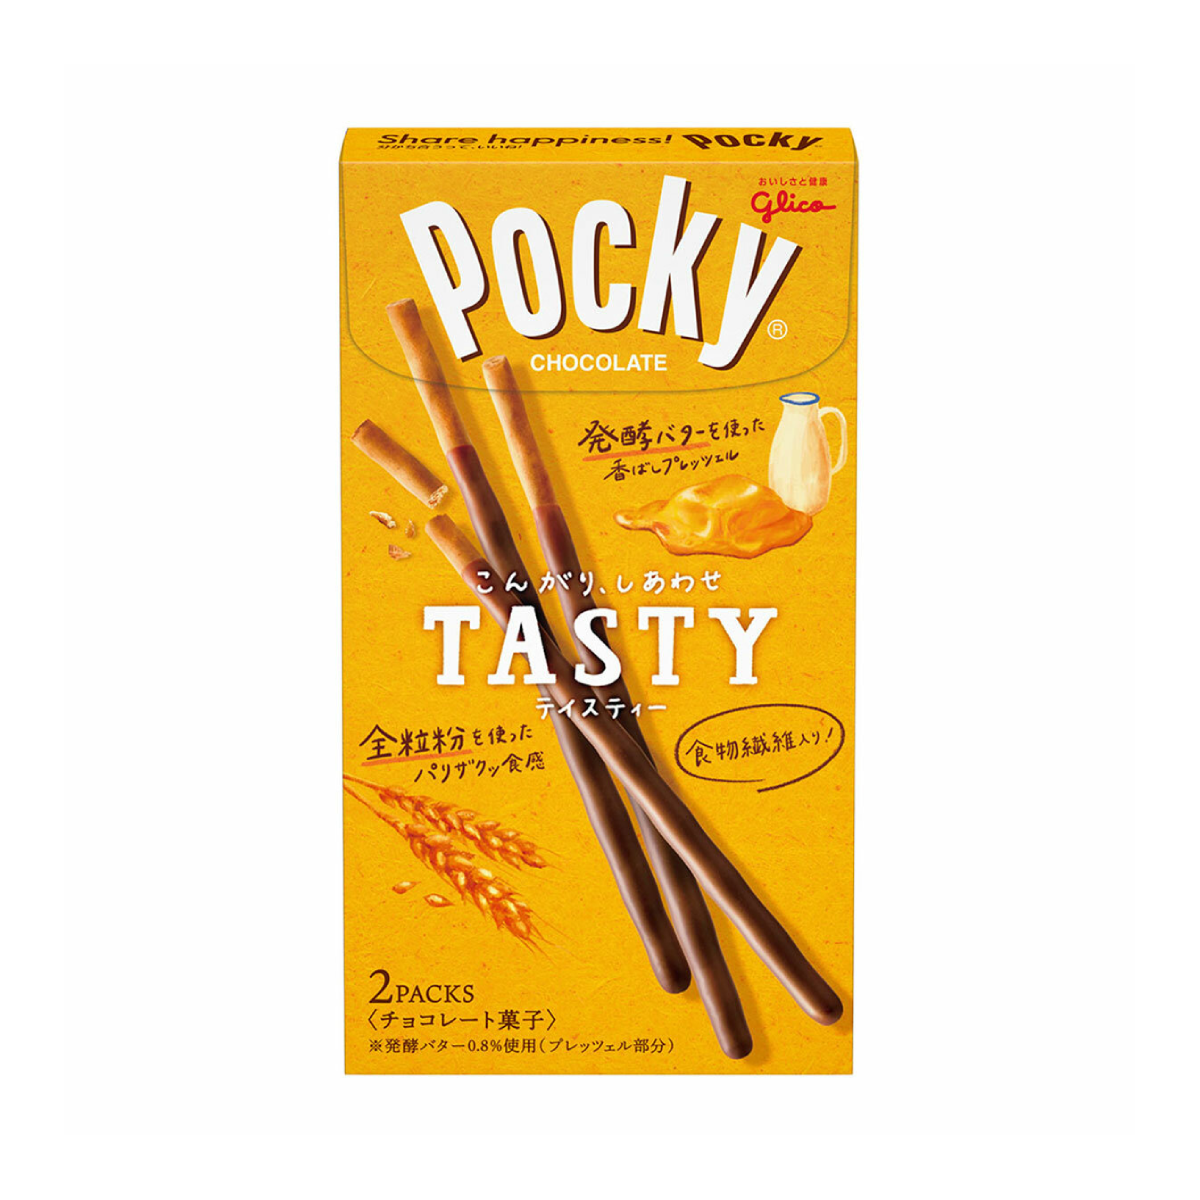 Glico Pocky Biscuit Sticks - Tasty Butter (72g)